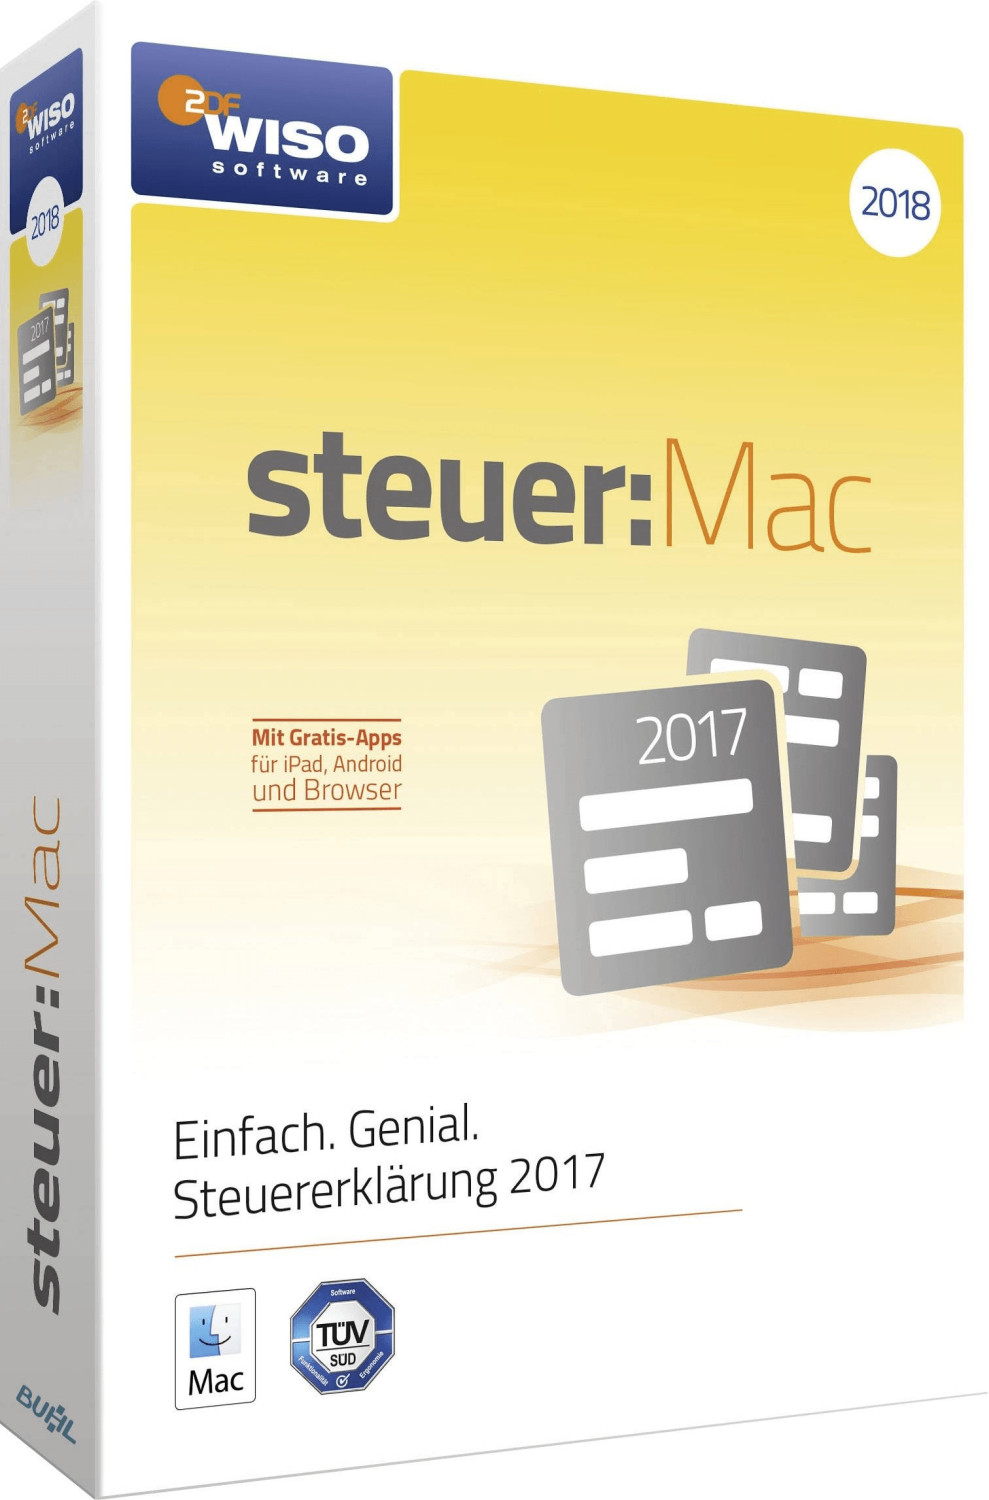 Buhl WISO Steuer:Mac 2018 (Box)